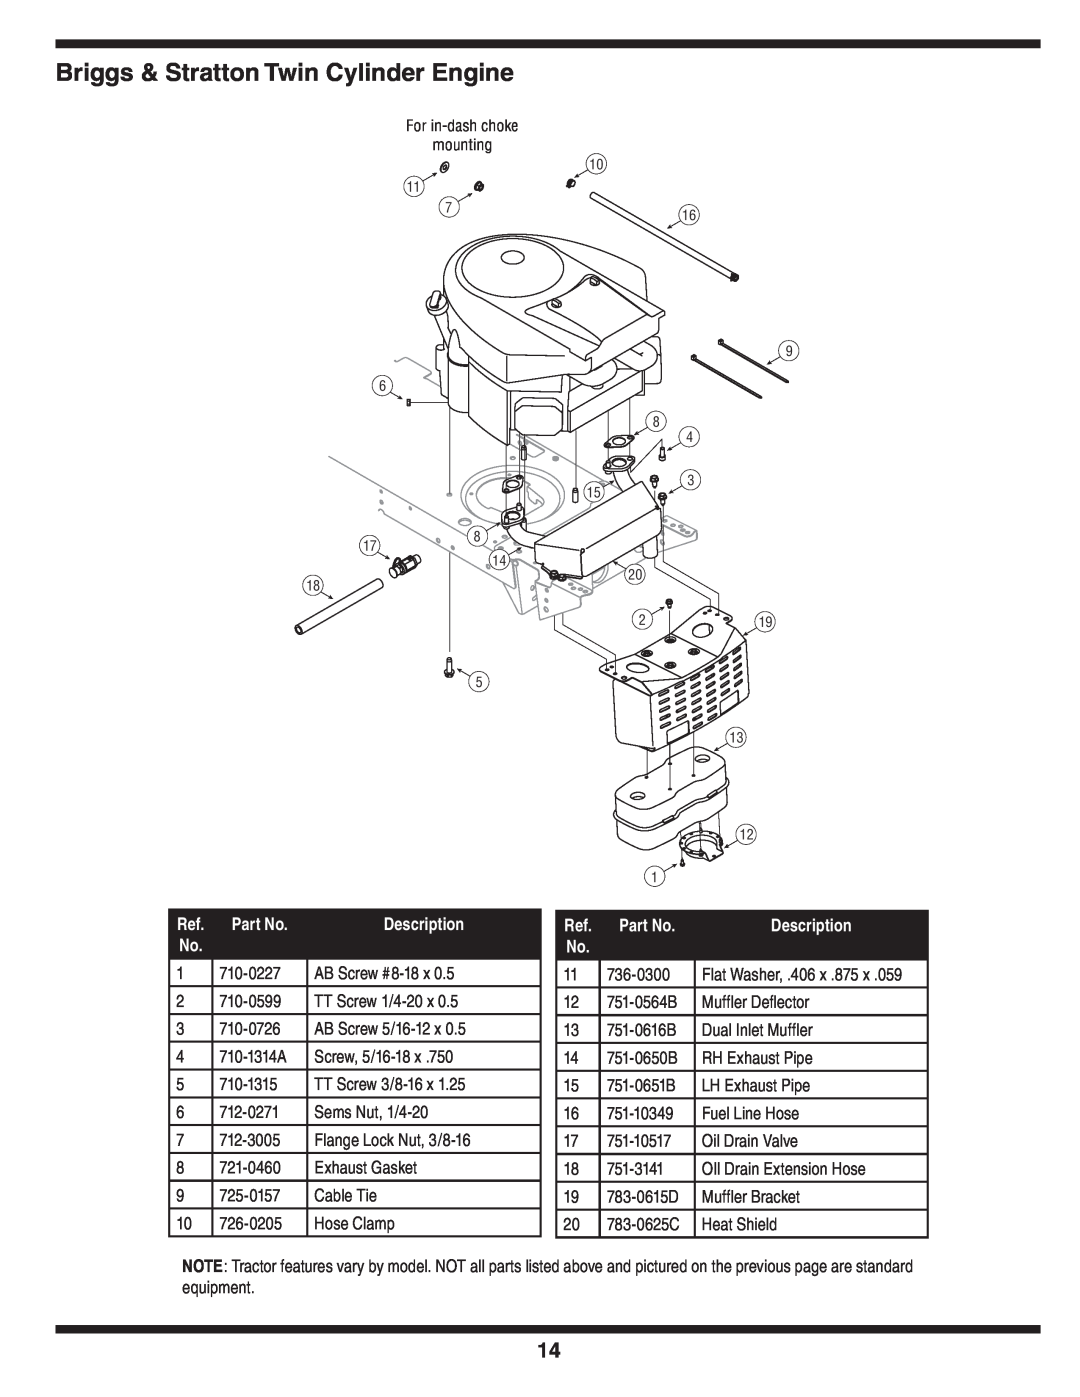 MTD 810 manual Briggs & Stratton Twin Cylinder Engine, For in-dash choke mounting, 783-0625C Heat Shield 